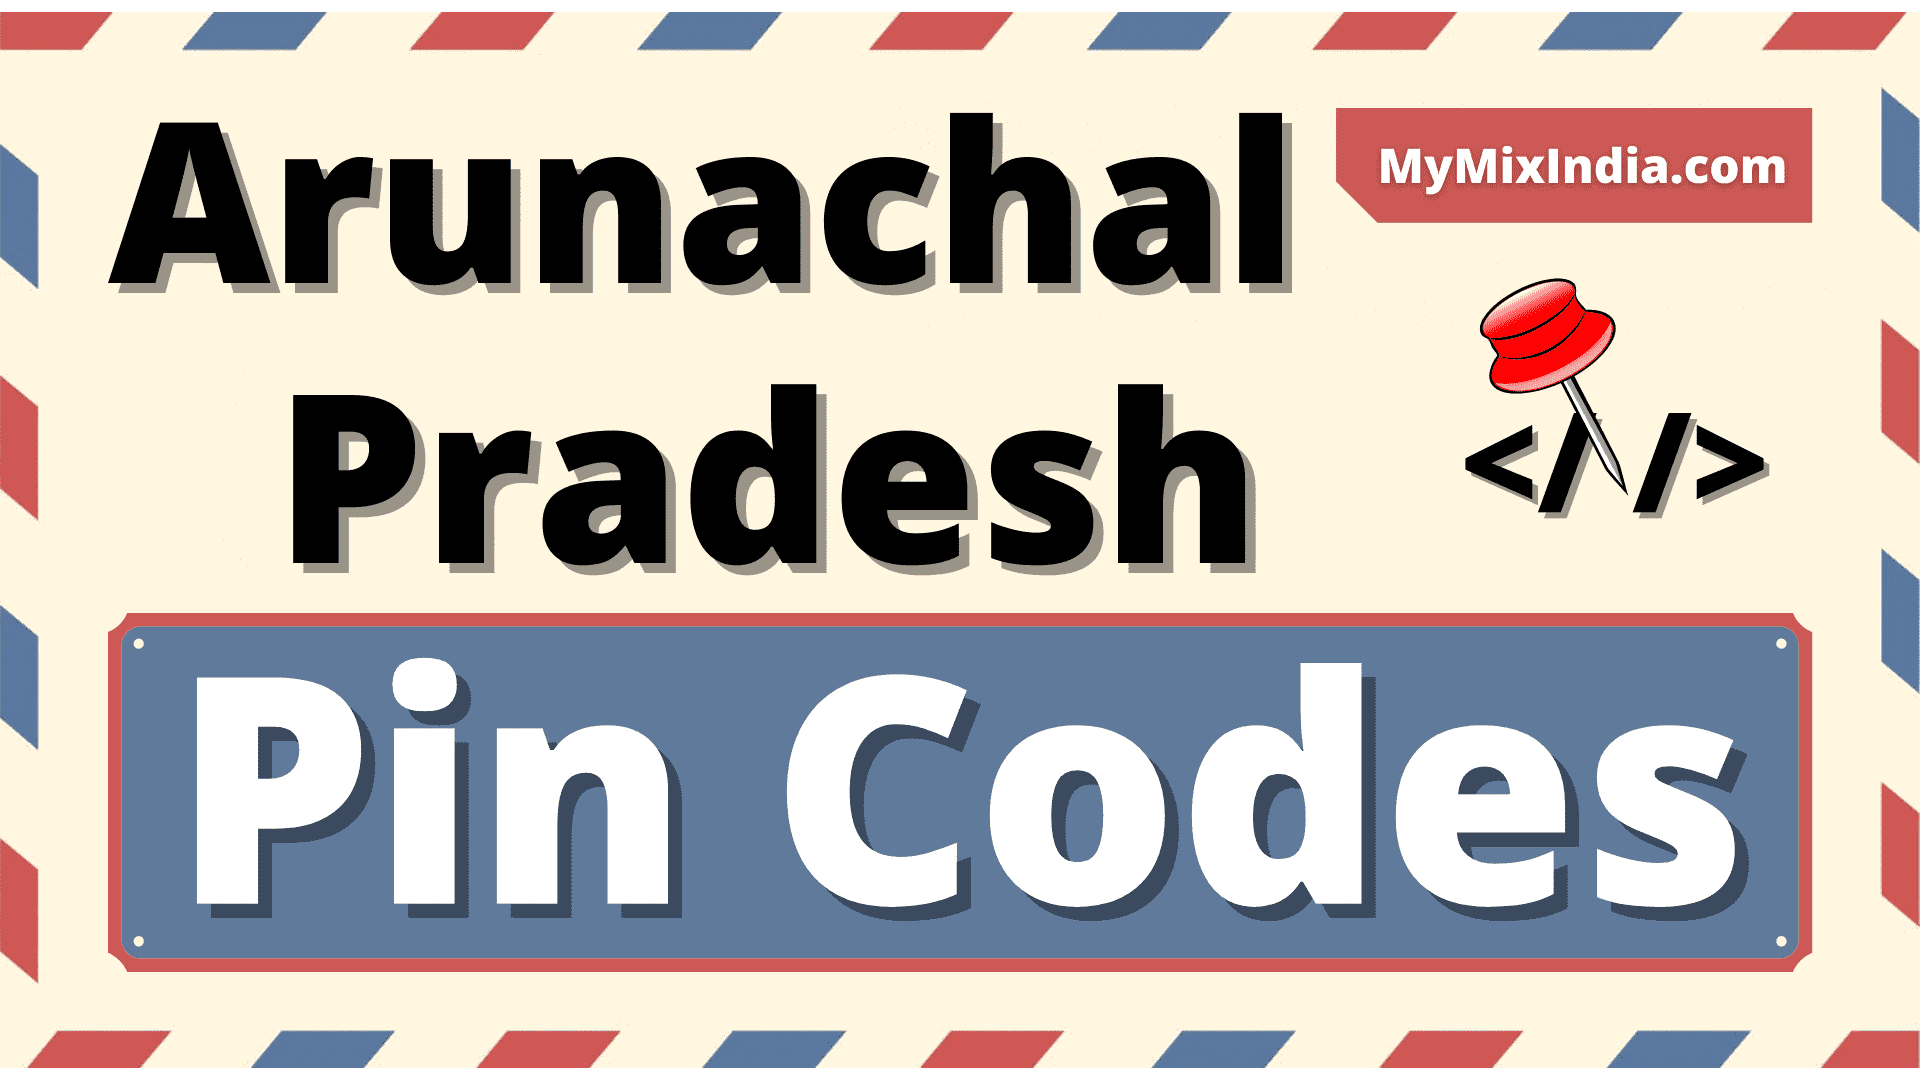 all arunachal pardesh pin codes - mymixindia.com